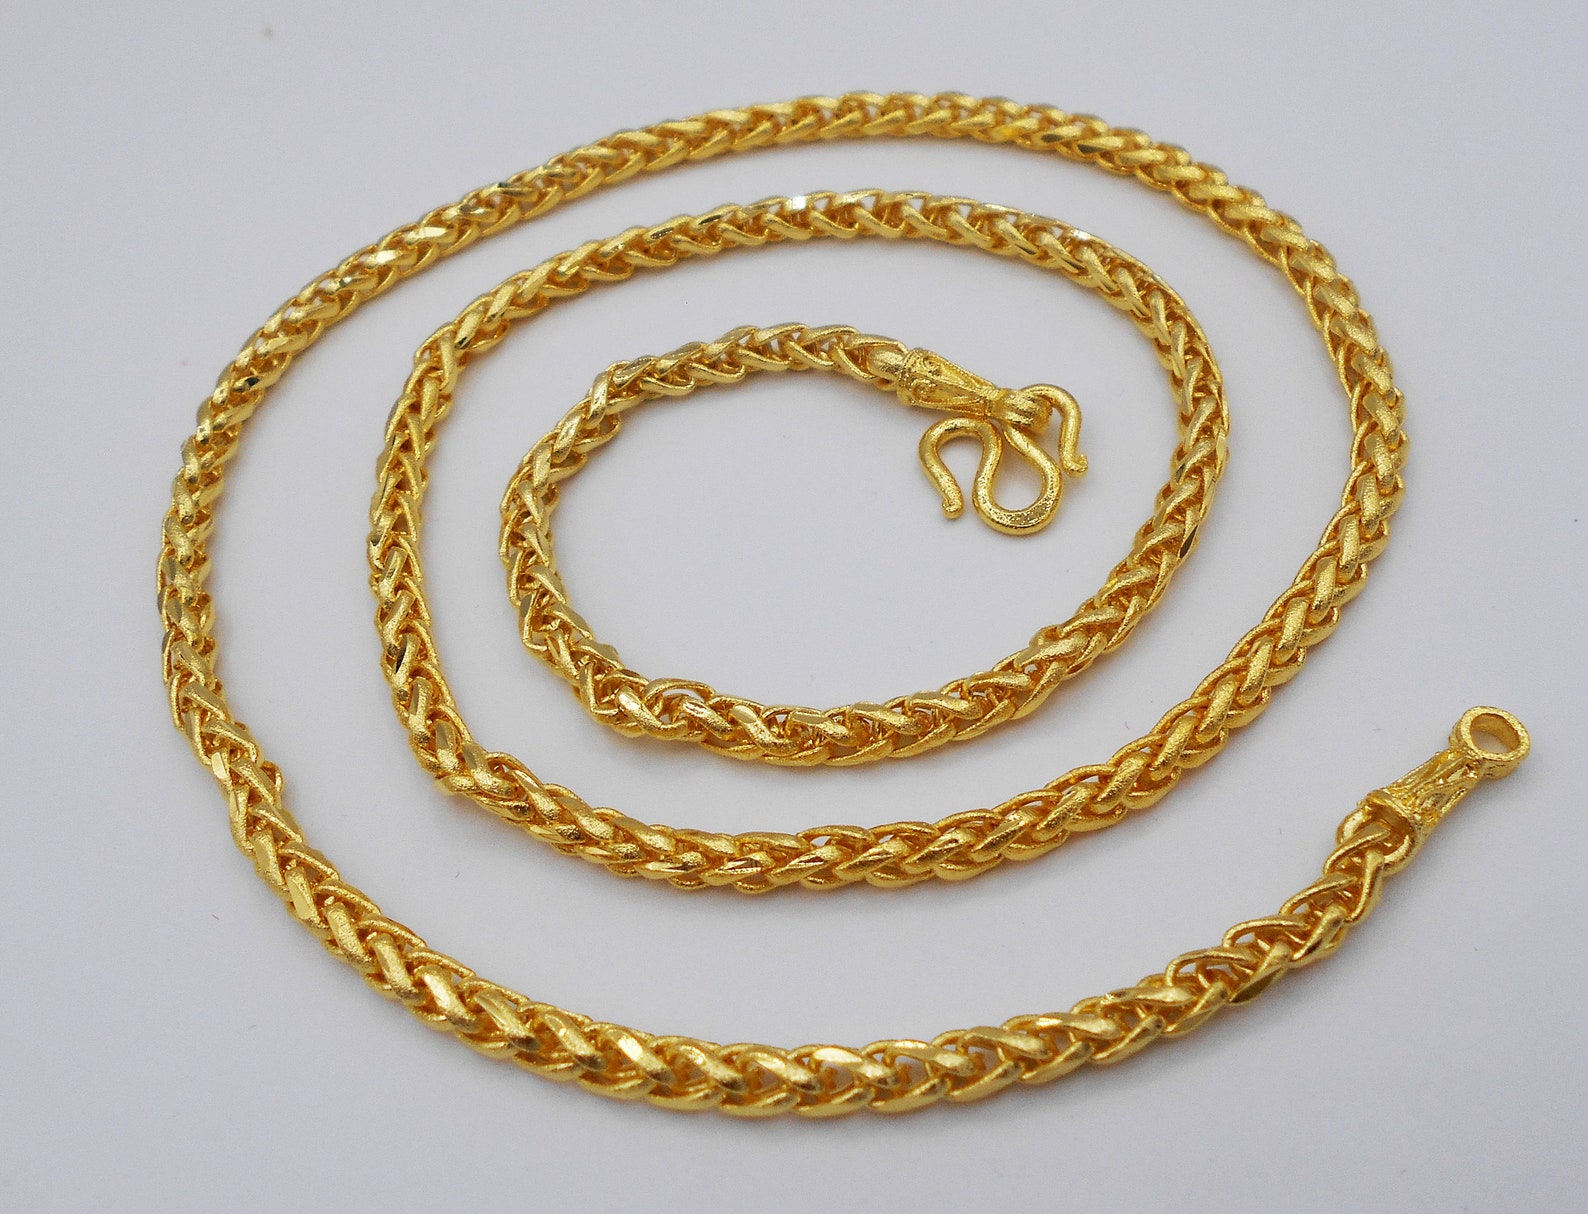 Braid Necklace Gold Chain 24 Inch 26 Grams 22K 23K 24K Thai | Etsy